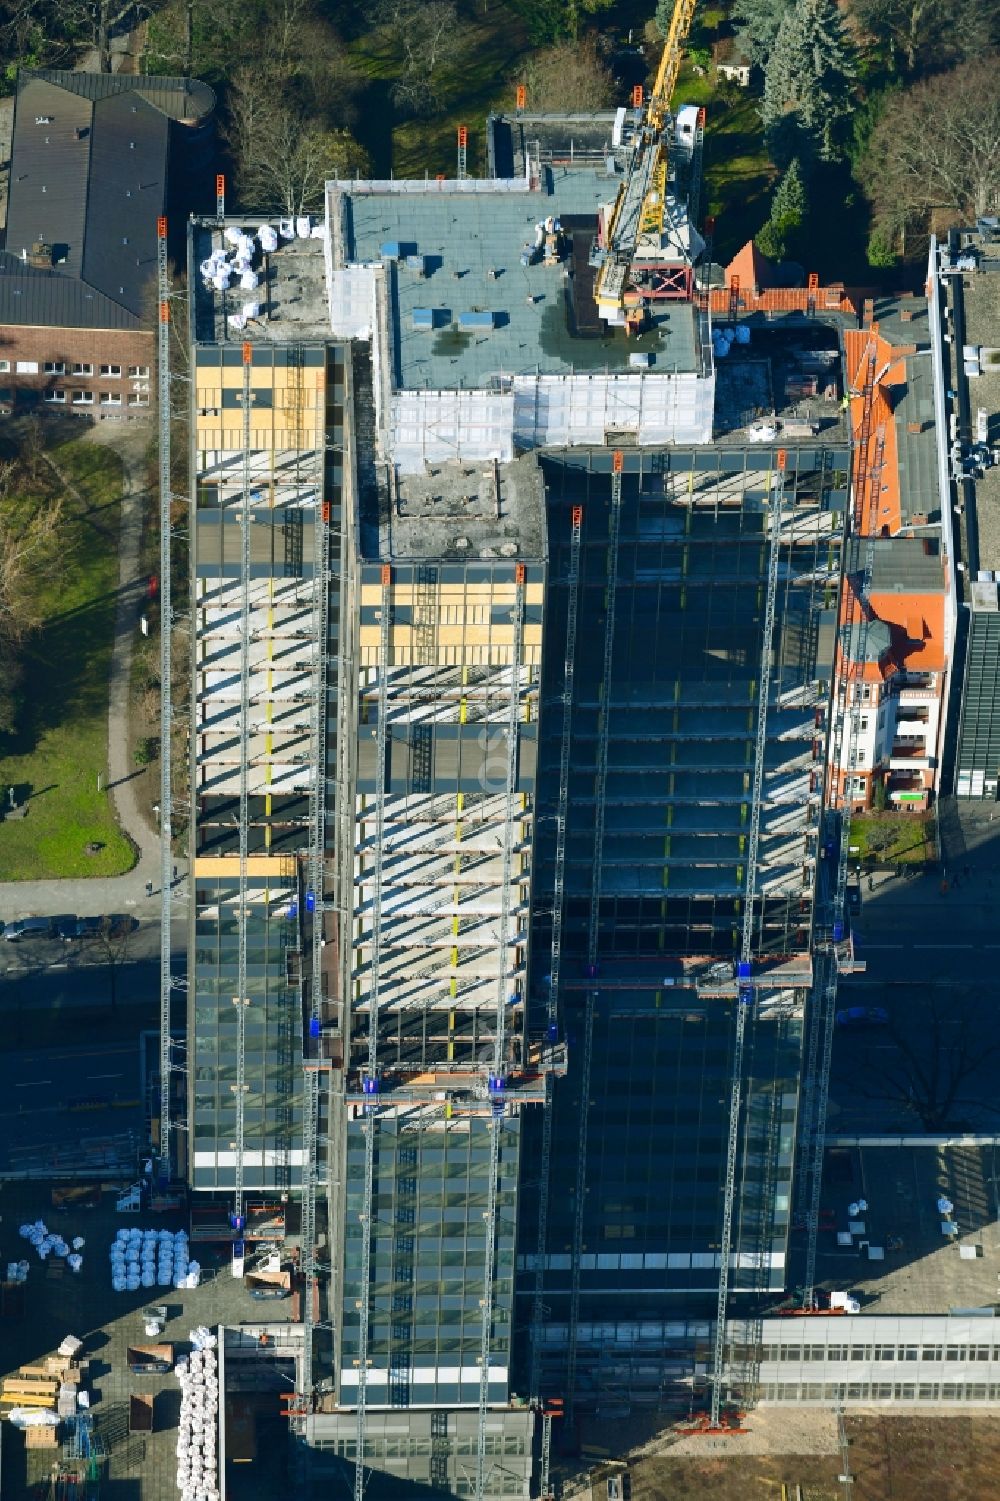 Aerial image Berlin - Highrise building of the Steglitzer Kreisel - UeBERLIN Wohntower complex on Schlossstrasse in the district of Steglitz in Berlin